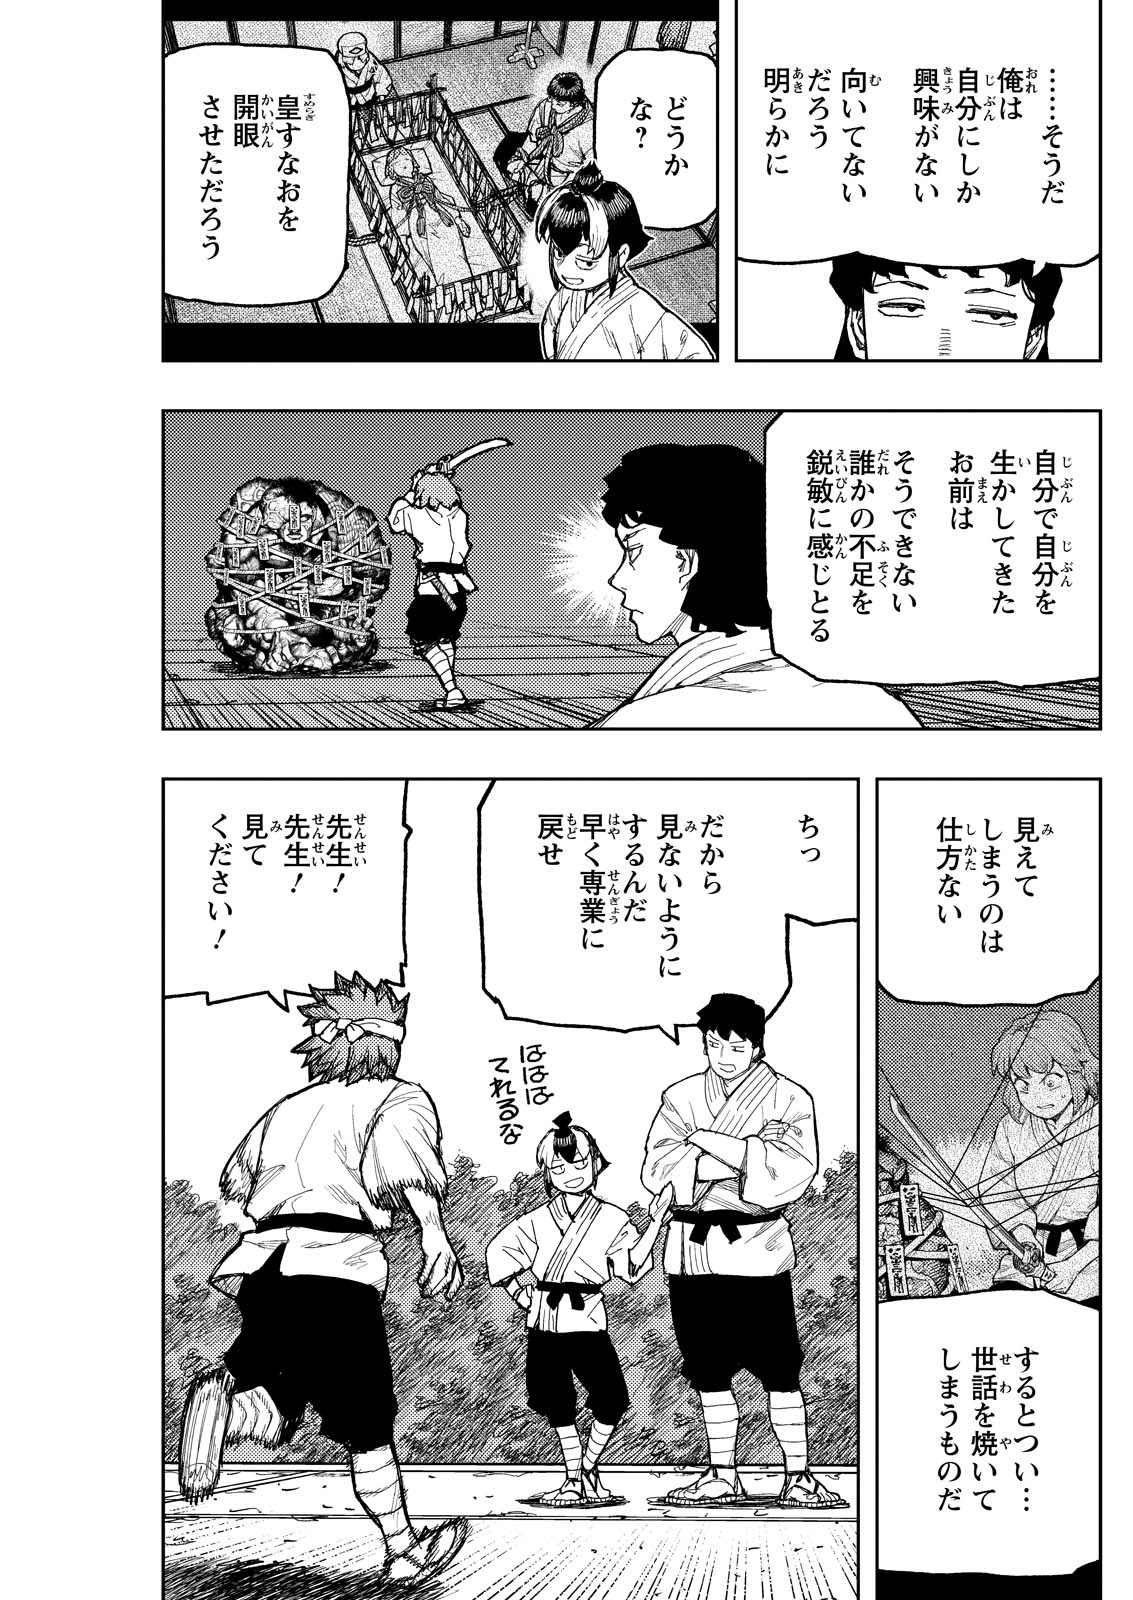 Tsugumomo - Chapter 169 - Page 17